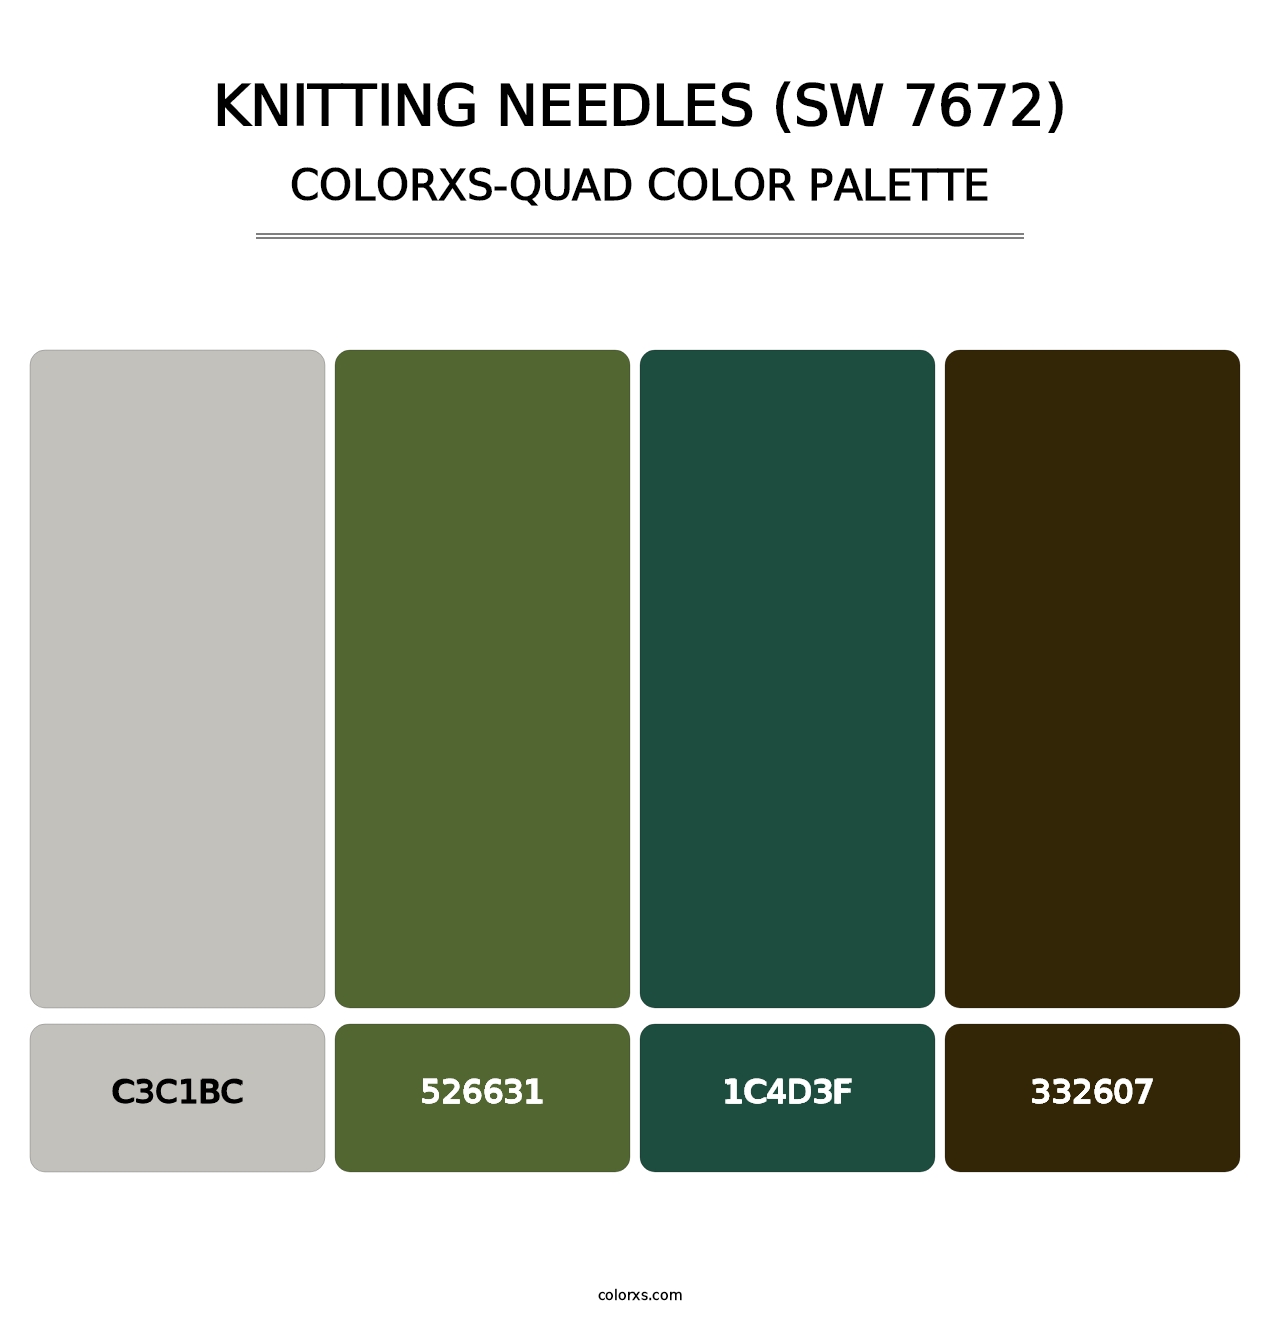 Knitting Needles (SW 7672) - Colorxs Quad Palette